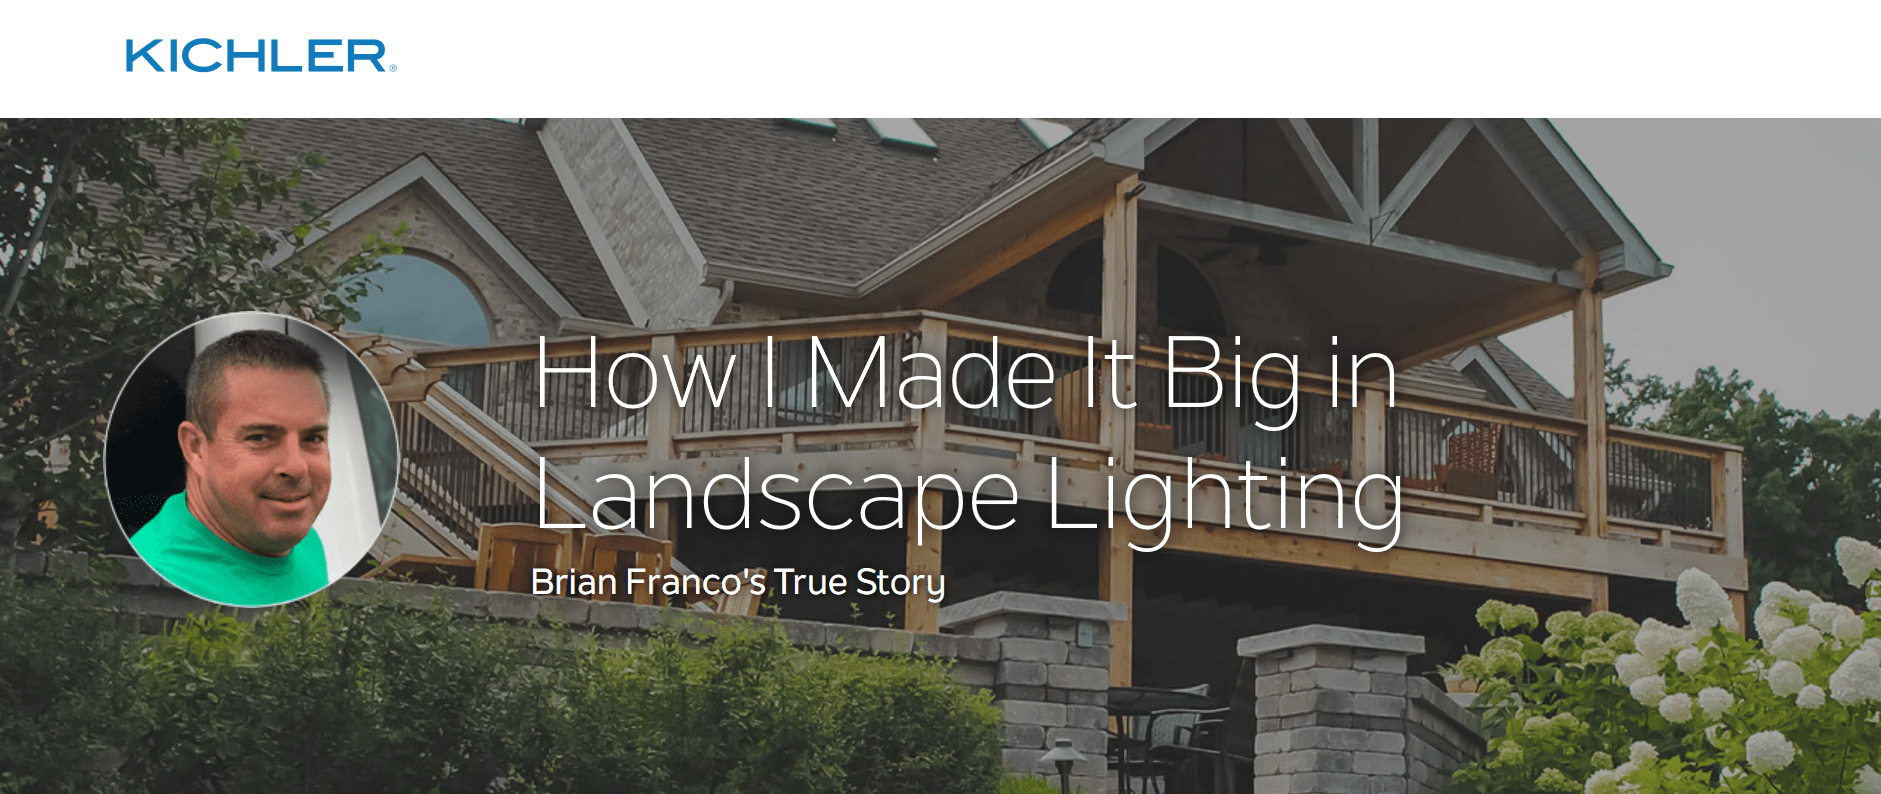 Kichler Professional Landscape Lighting -- Content Marketing Pilot Program